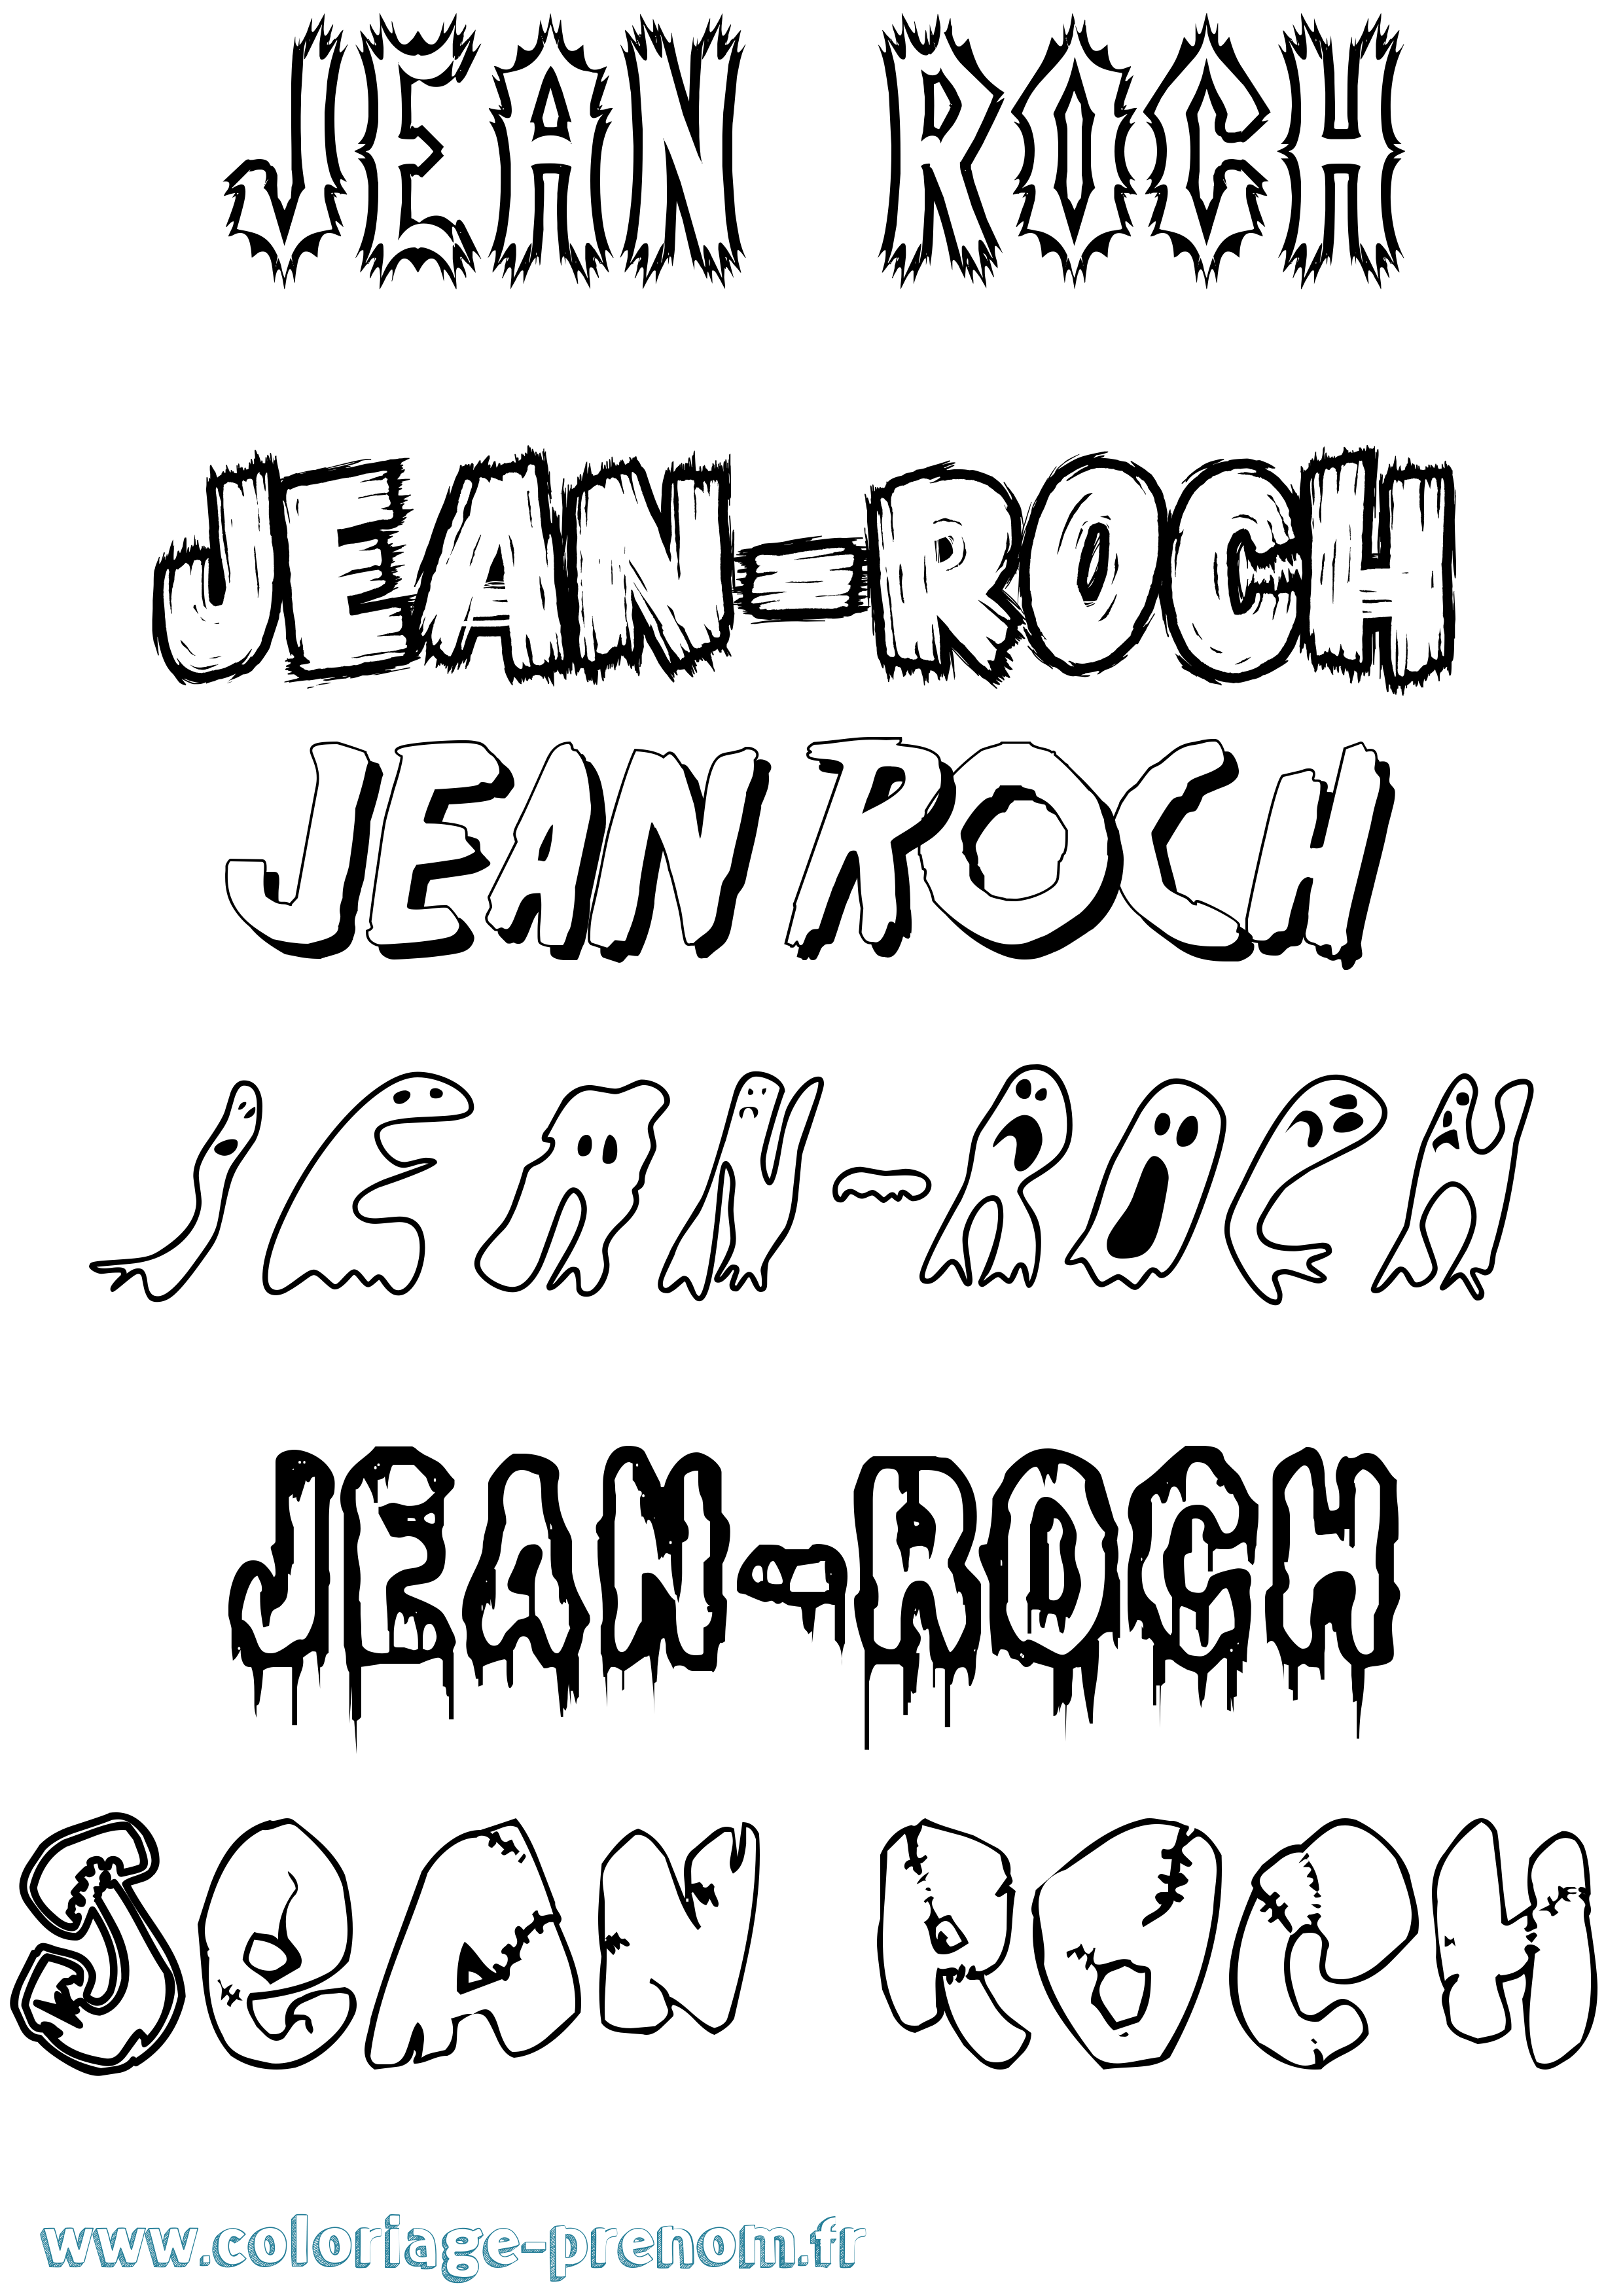 Coloriage prénom Jean-Roch Frisson